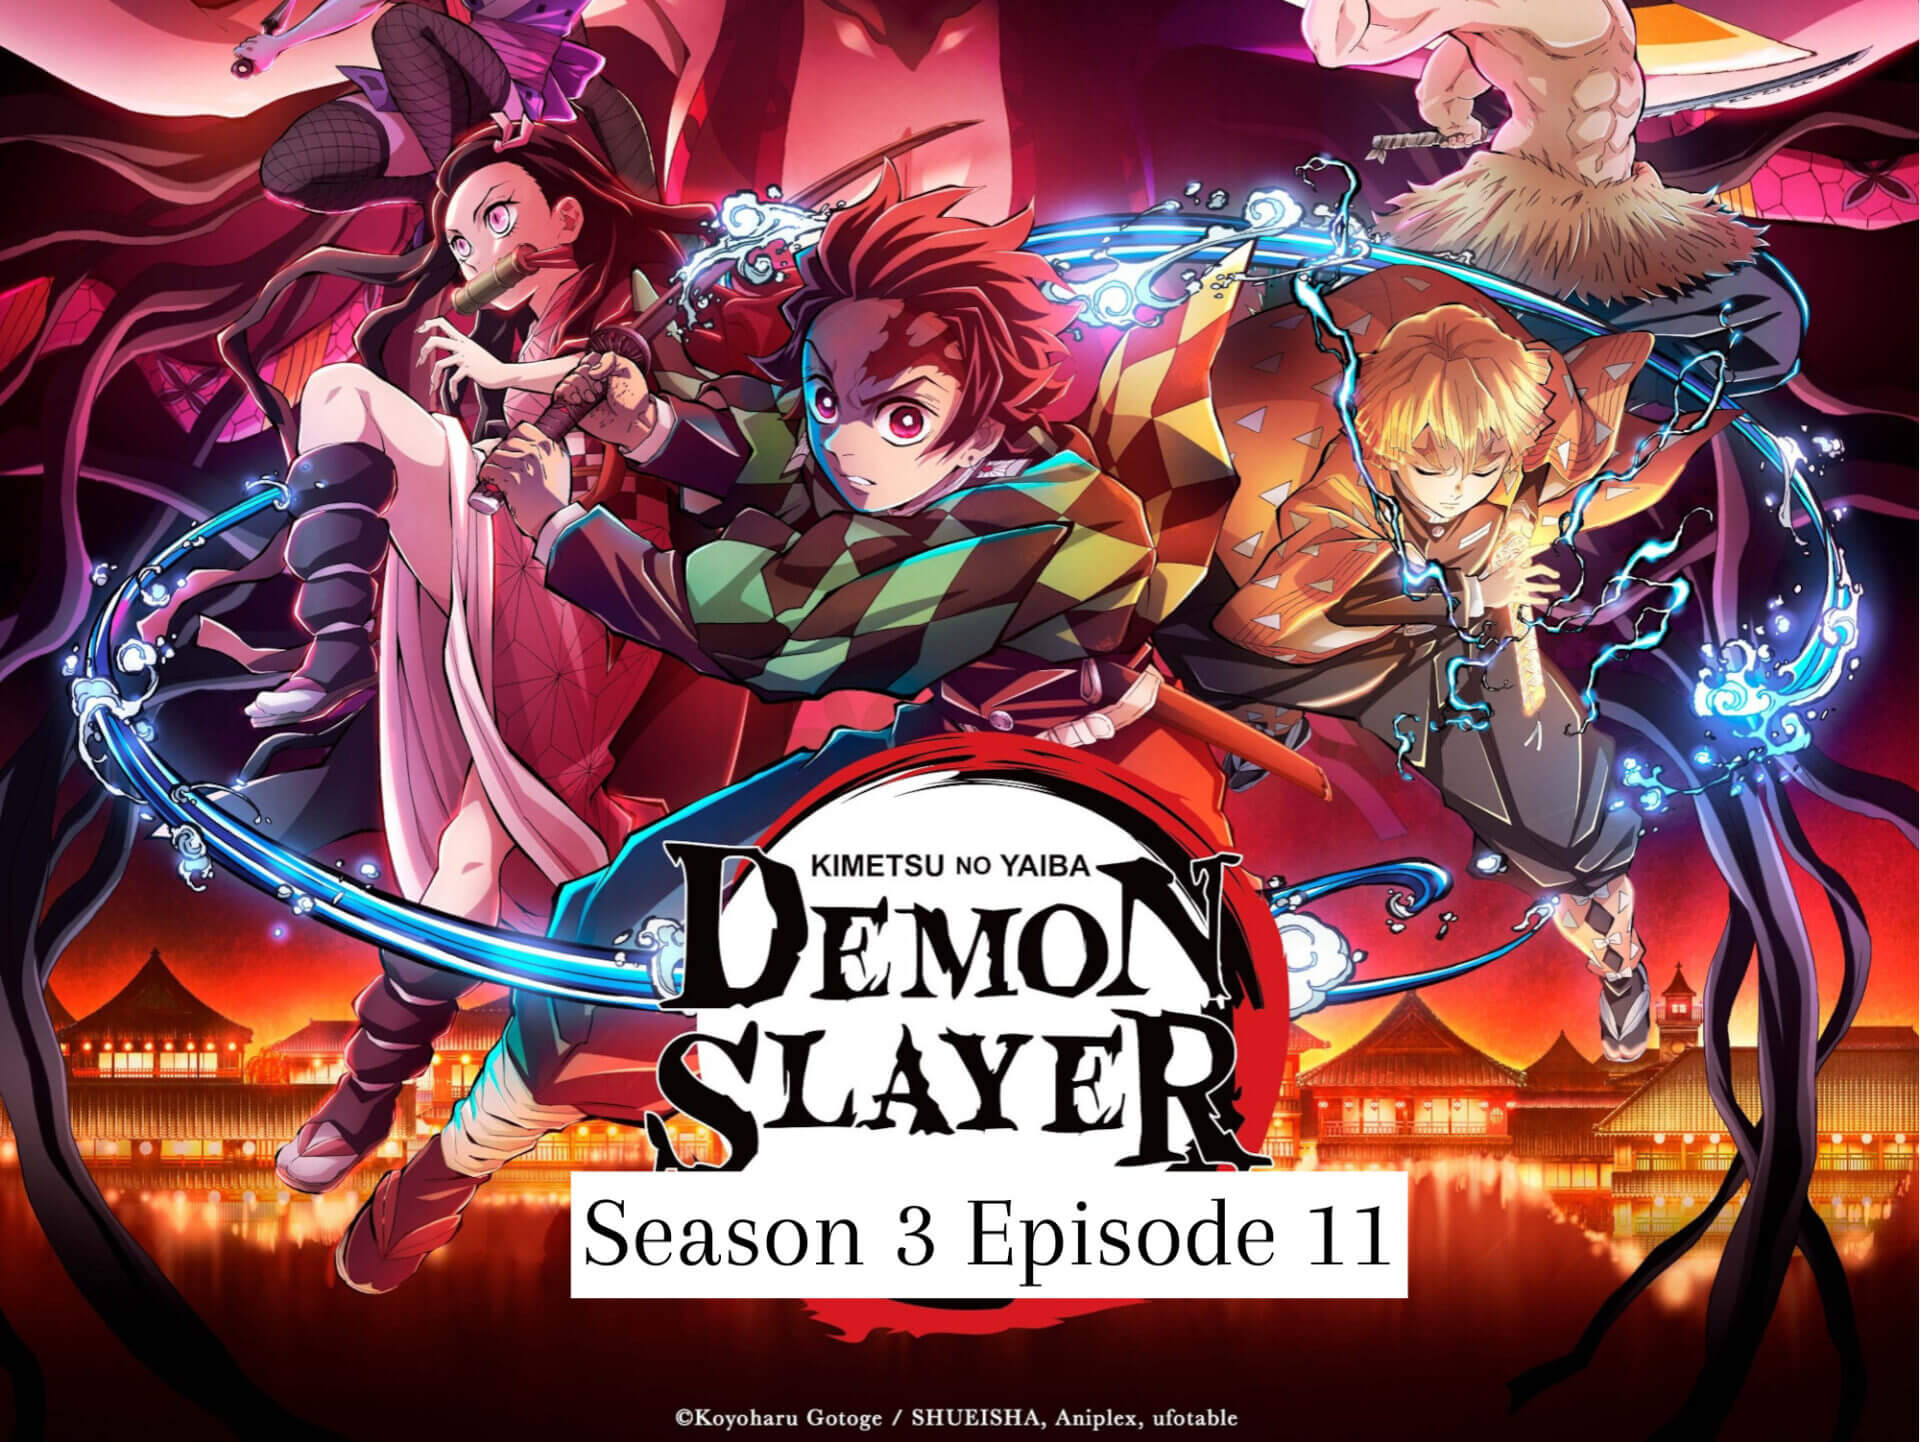 Demon Slayer Season 3 Episode 11 release date